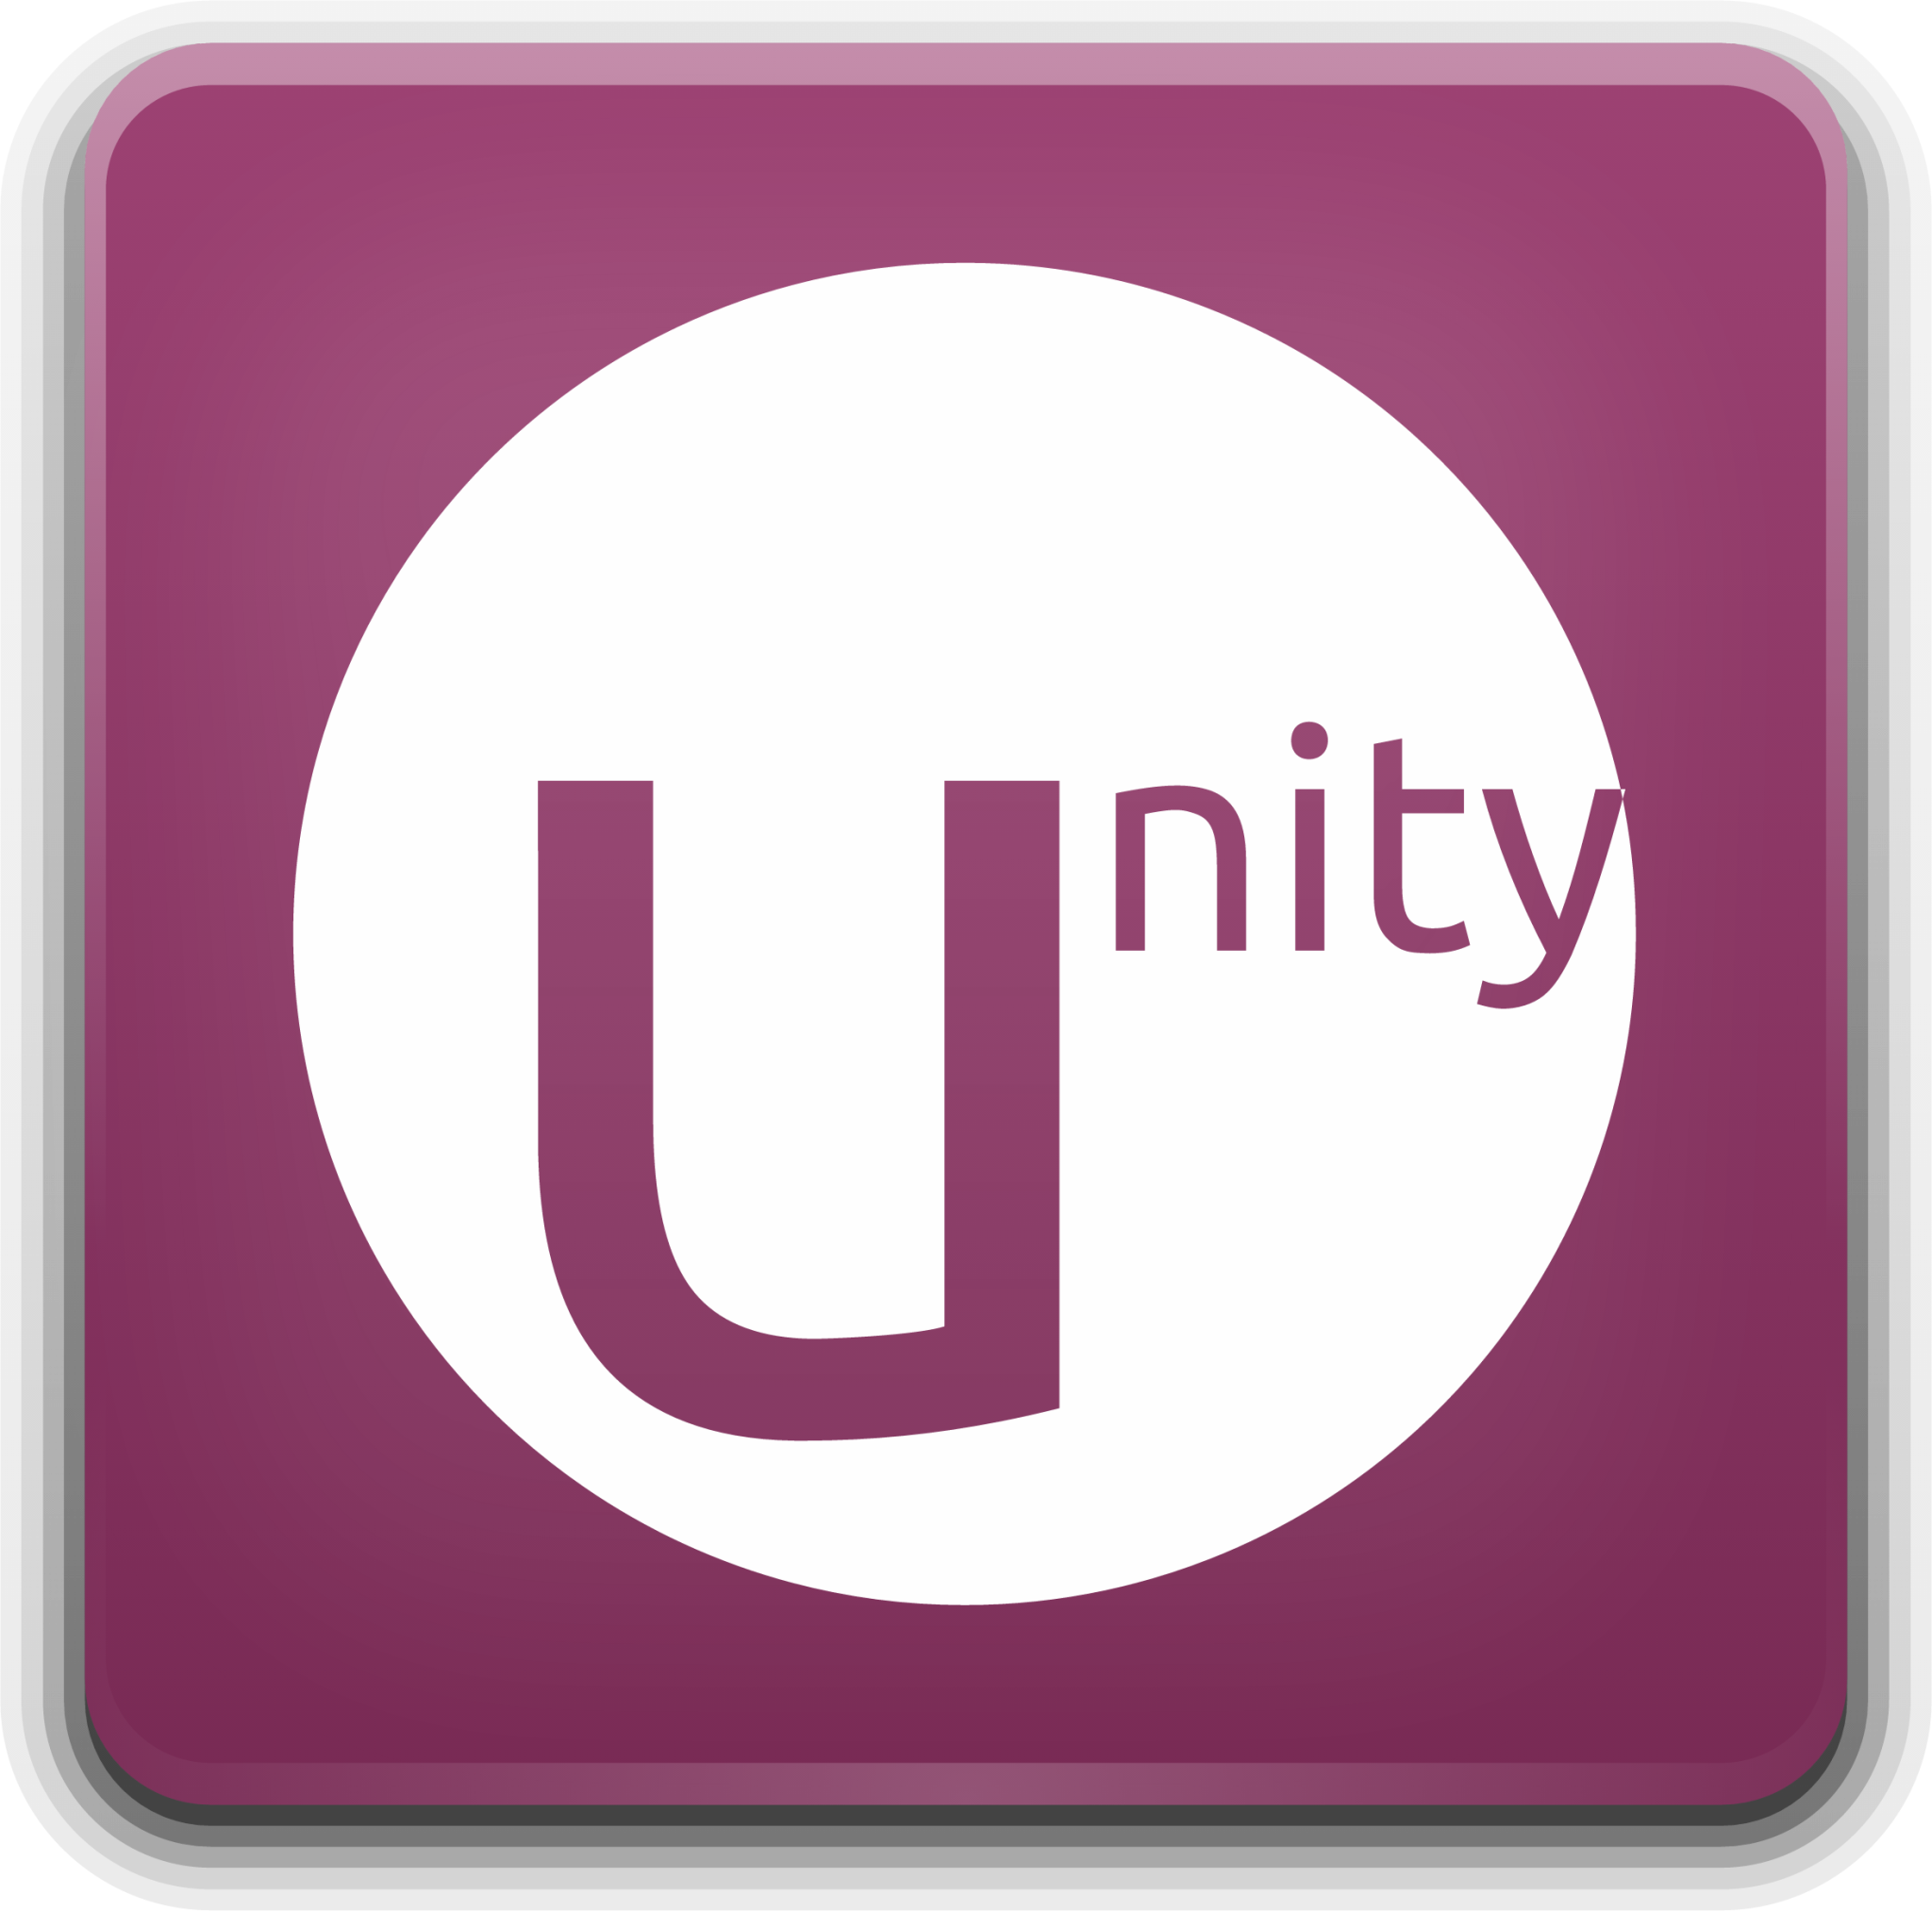 desktop environment unity icon